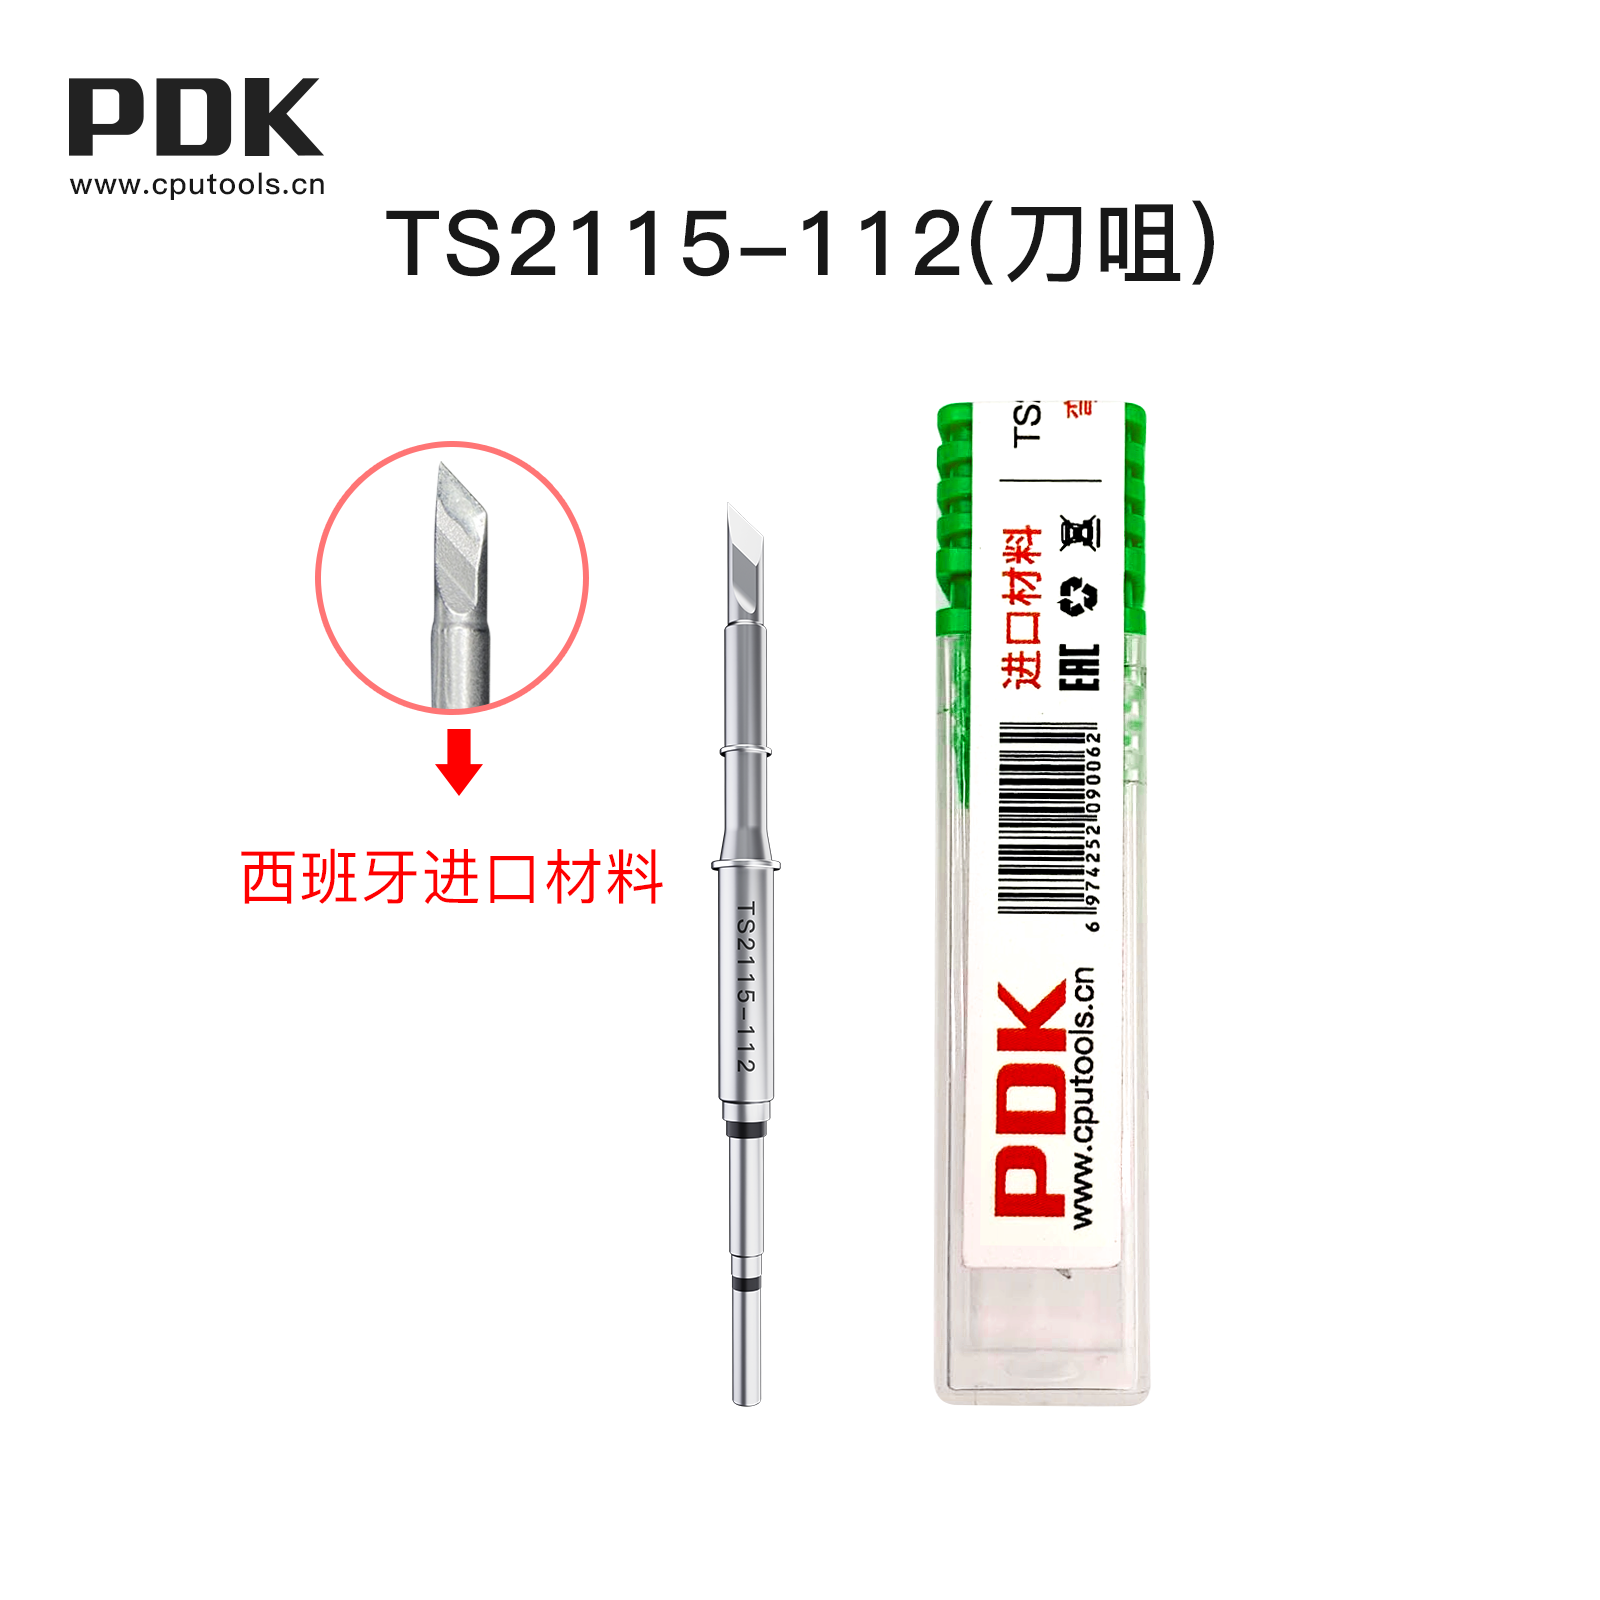 PDK TS2115 Series soldering iron head(图1)